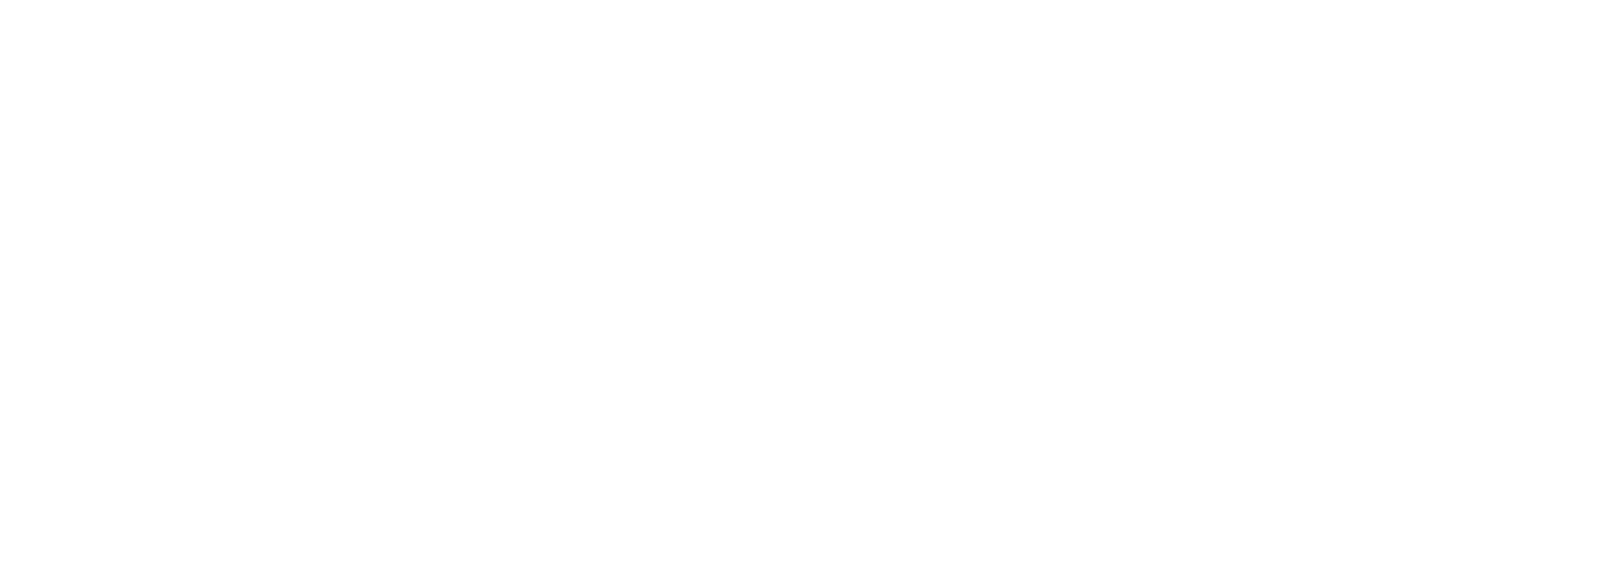 Colorado Machine Works